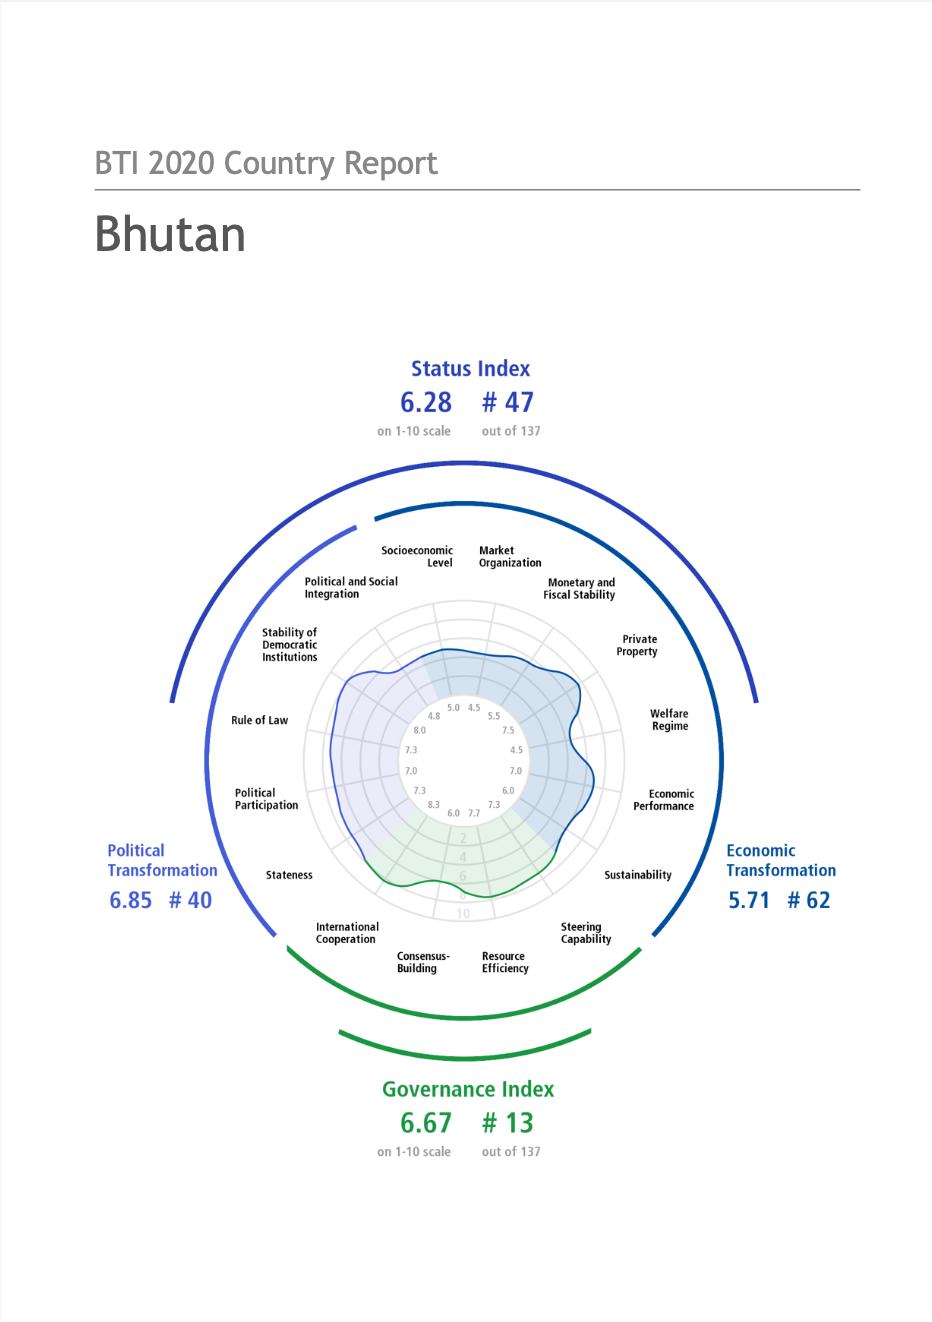 BTI 2020 Country Report: Bhutan